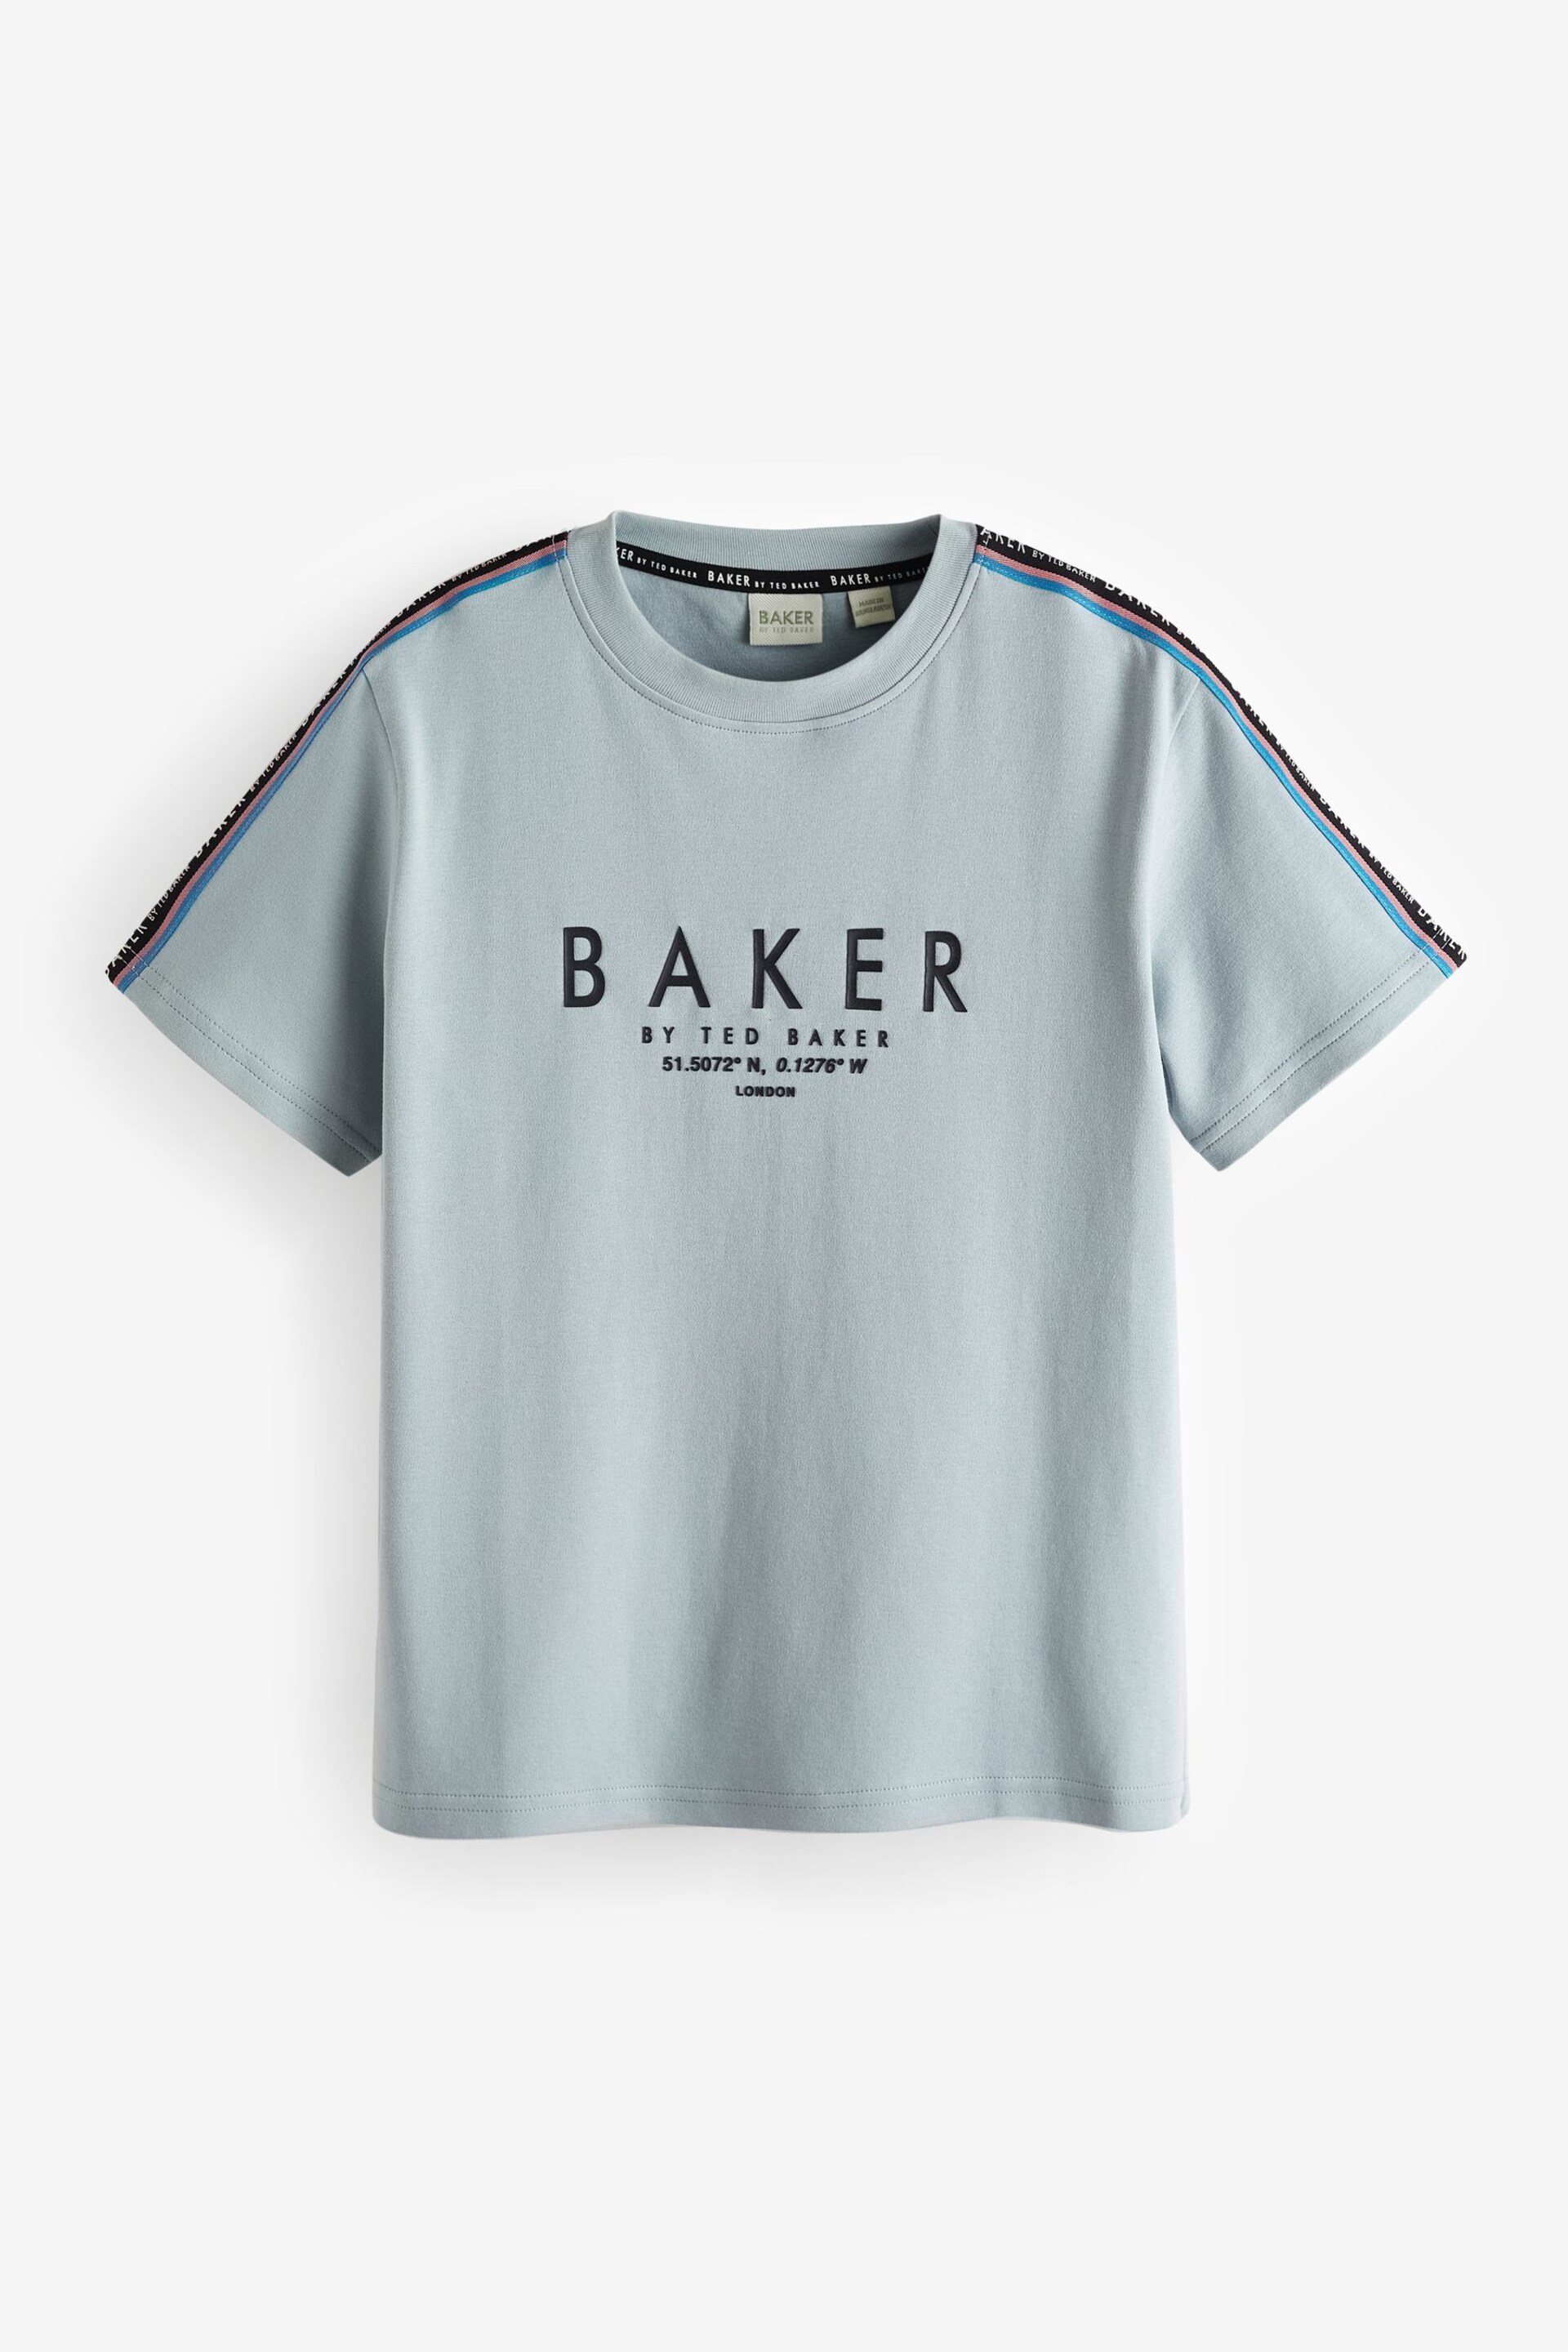 Baker by Ted Baker Blue Tape Detail T-Shirt - Image 10 of 12